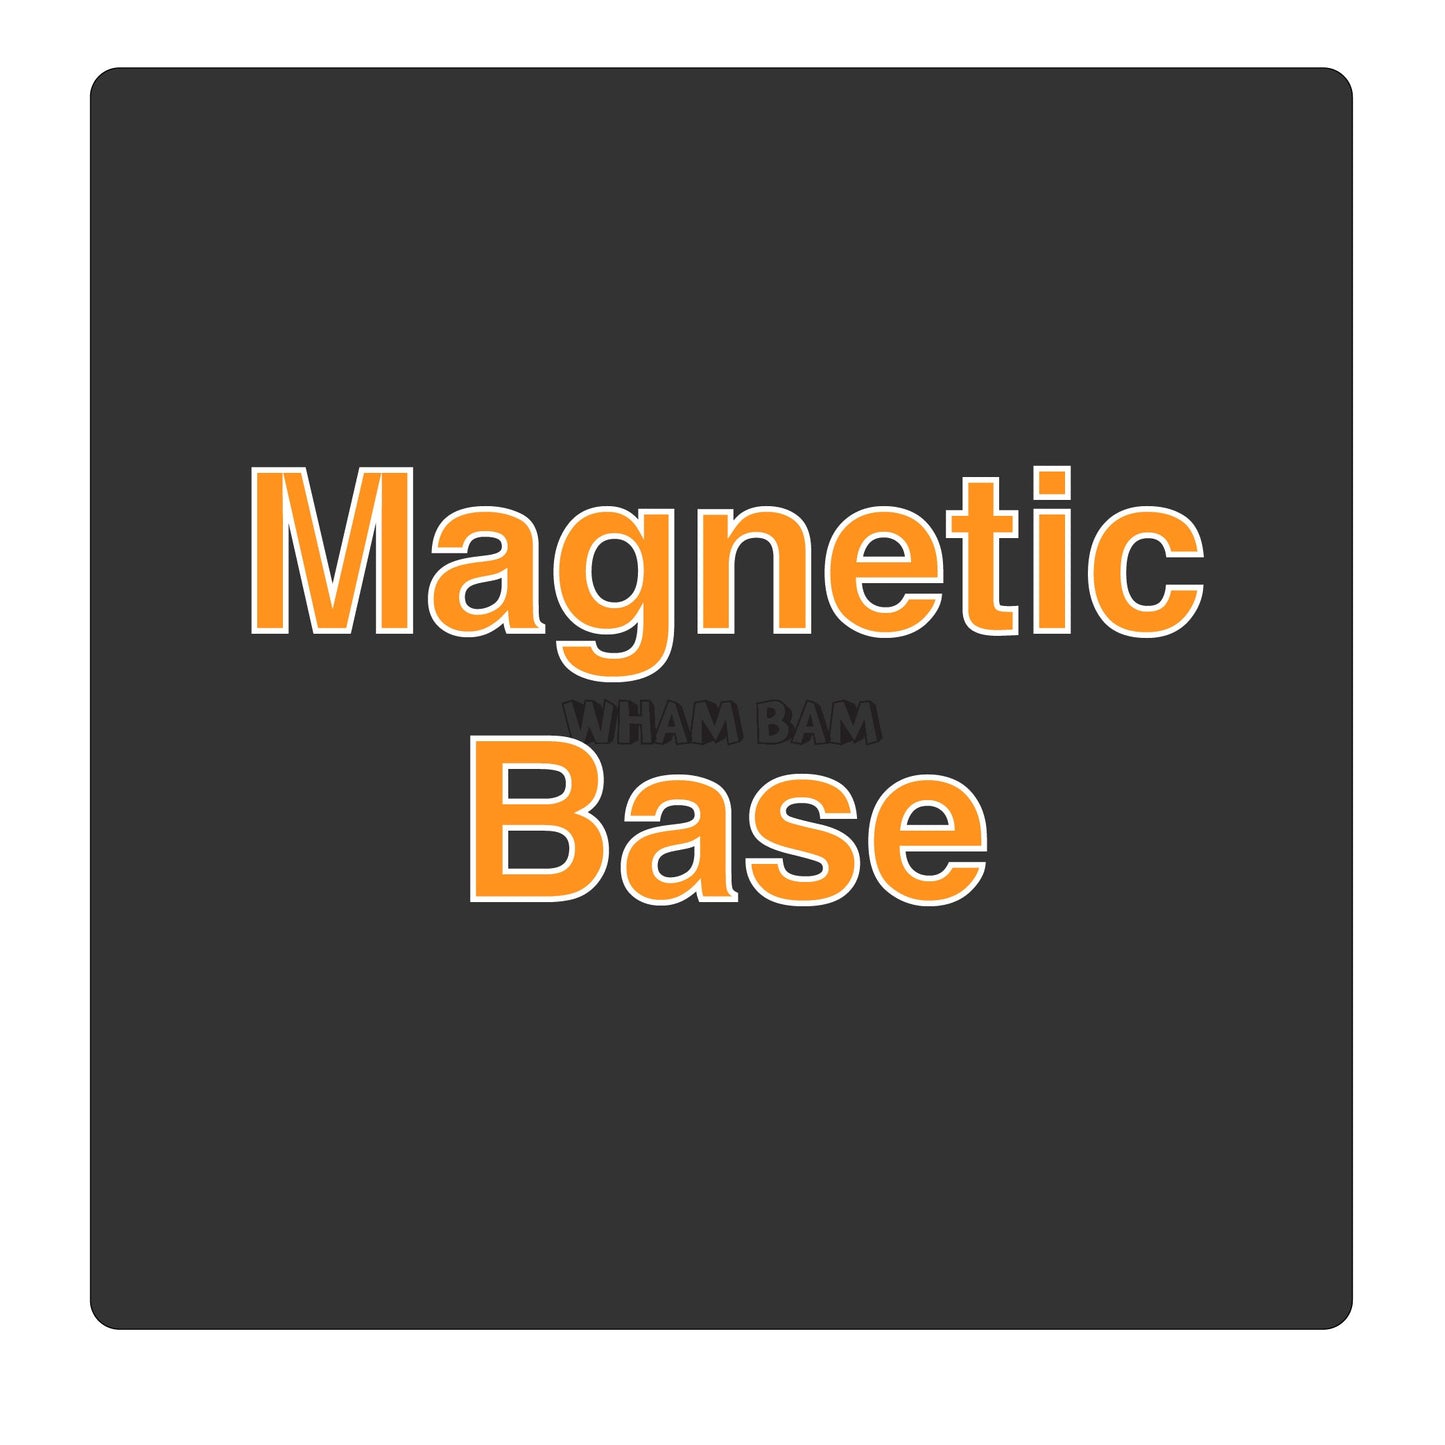 Magnetic Base - 410 x 410 - Creality CR-10 S4, VORON Design Core XY